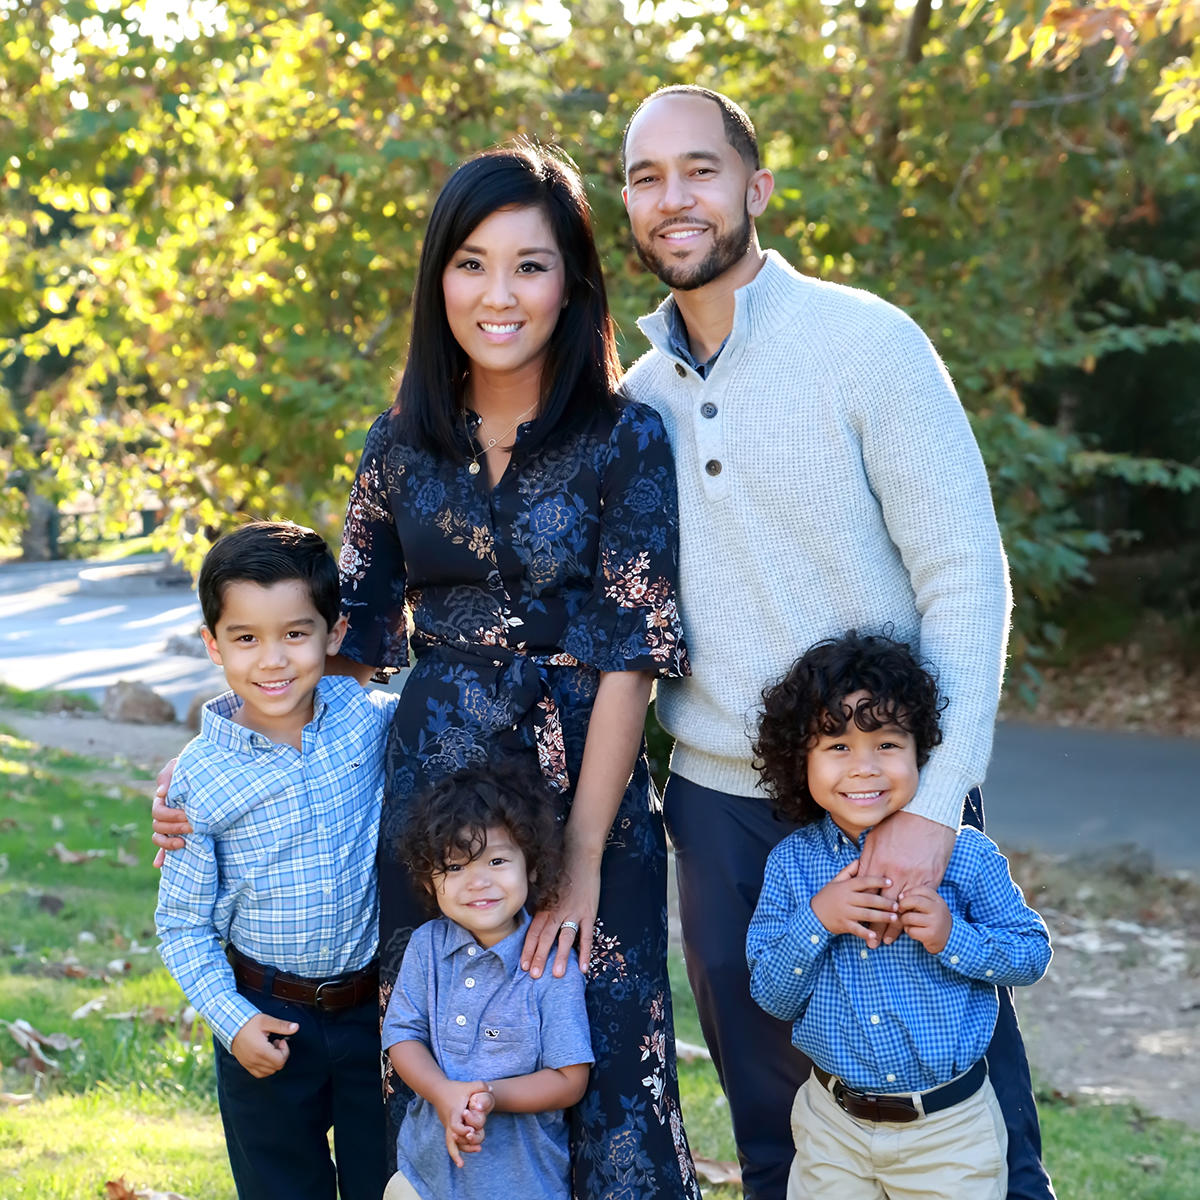 Alice Kim-Bundy, DMD08, and her husband, Michael Bundy, DMD08, pose with their family.